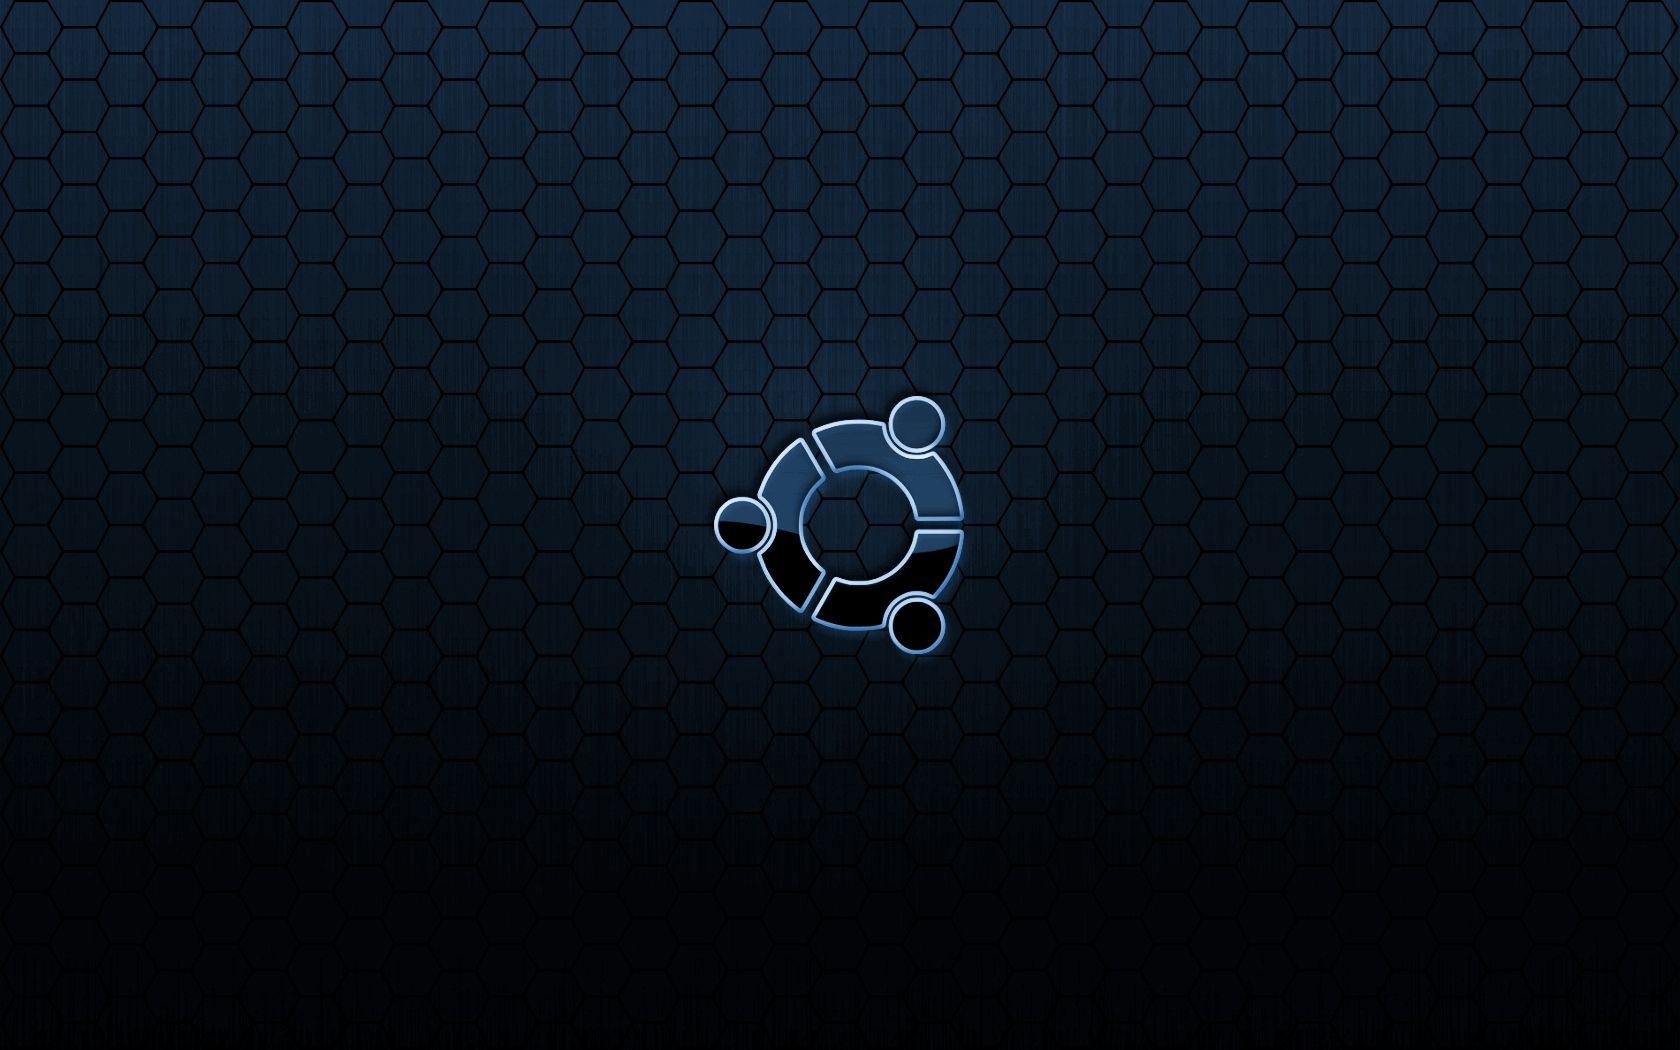 Ubuntu Wallpaper Art Blue. Best Image Background